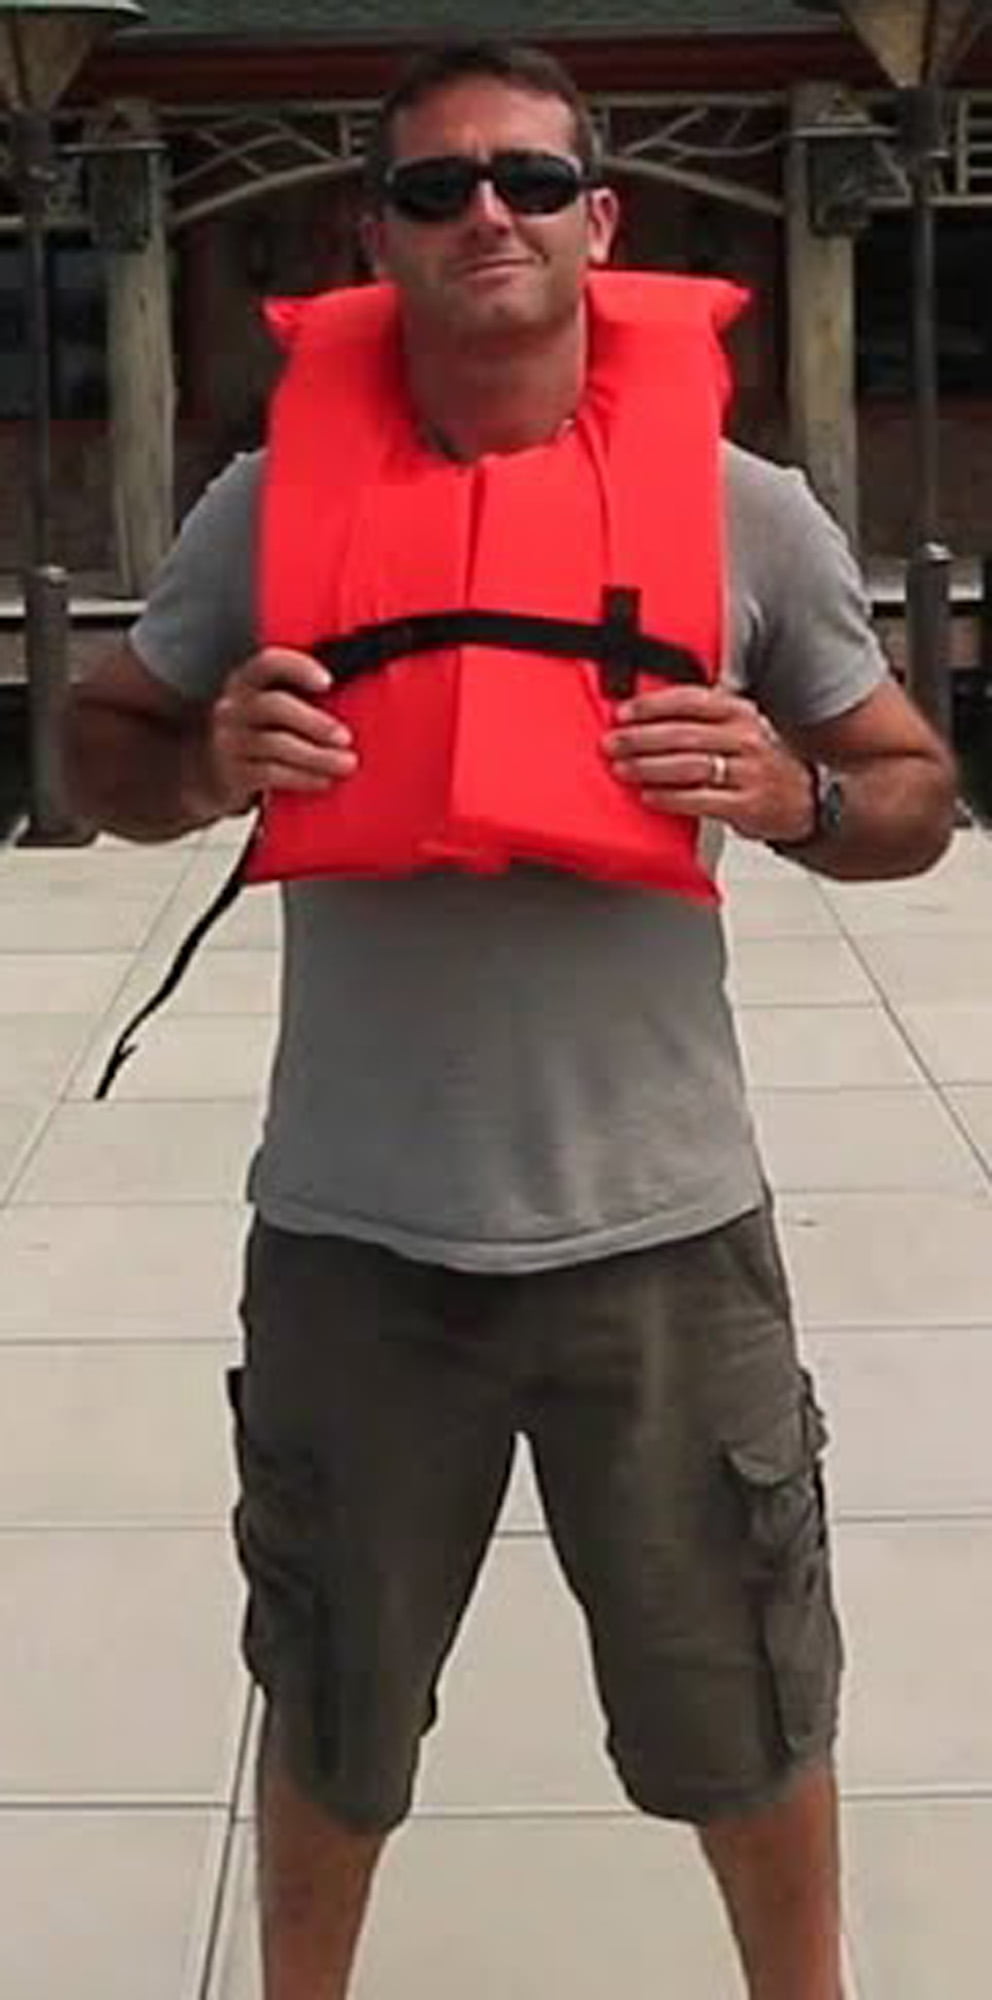 Details about   Swimming vest adult type ii orange life jacket adult vest for 120 kg person 